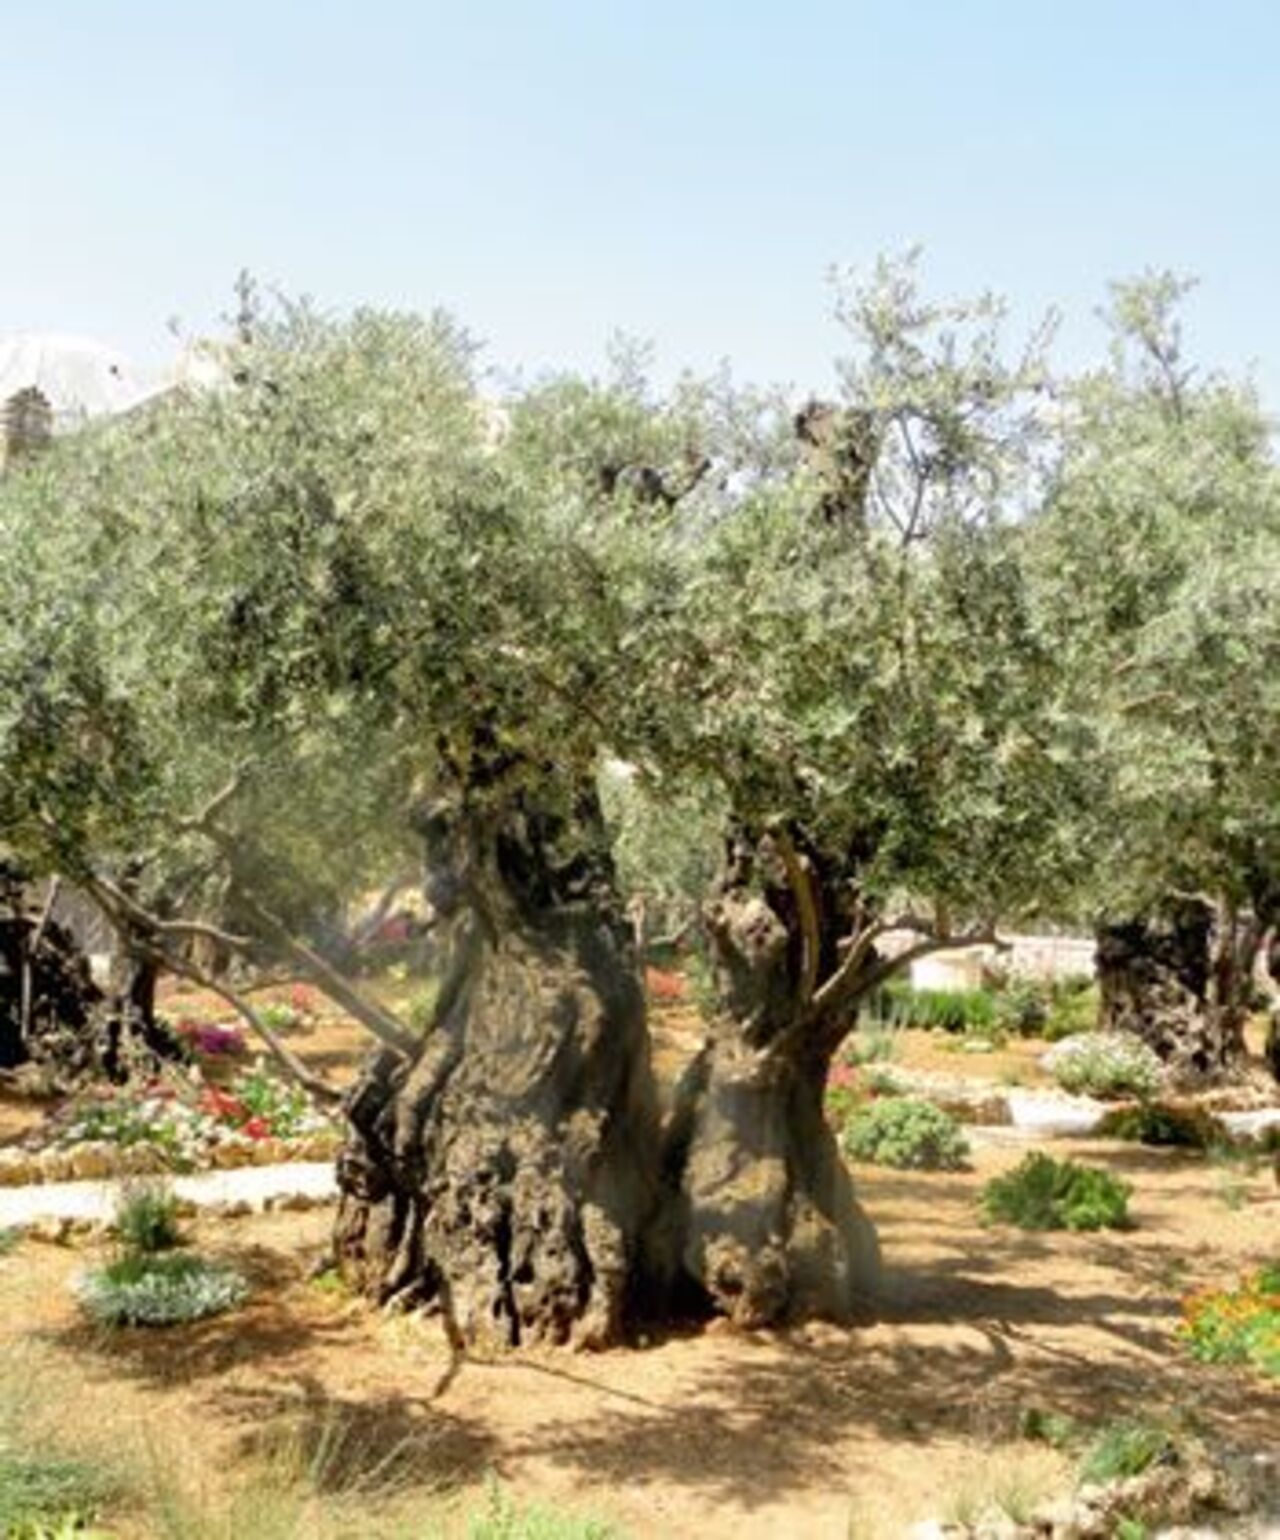 oliveiras-sagradas-a-historia-do-azeite-de-israel